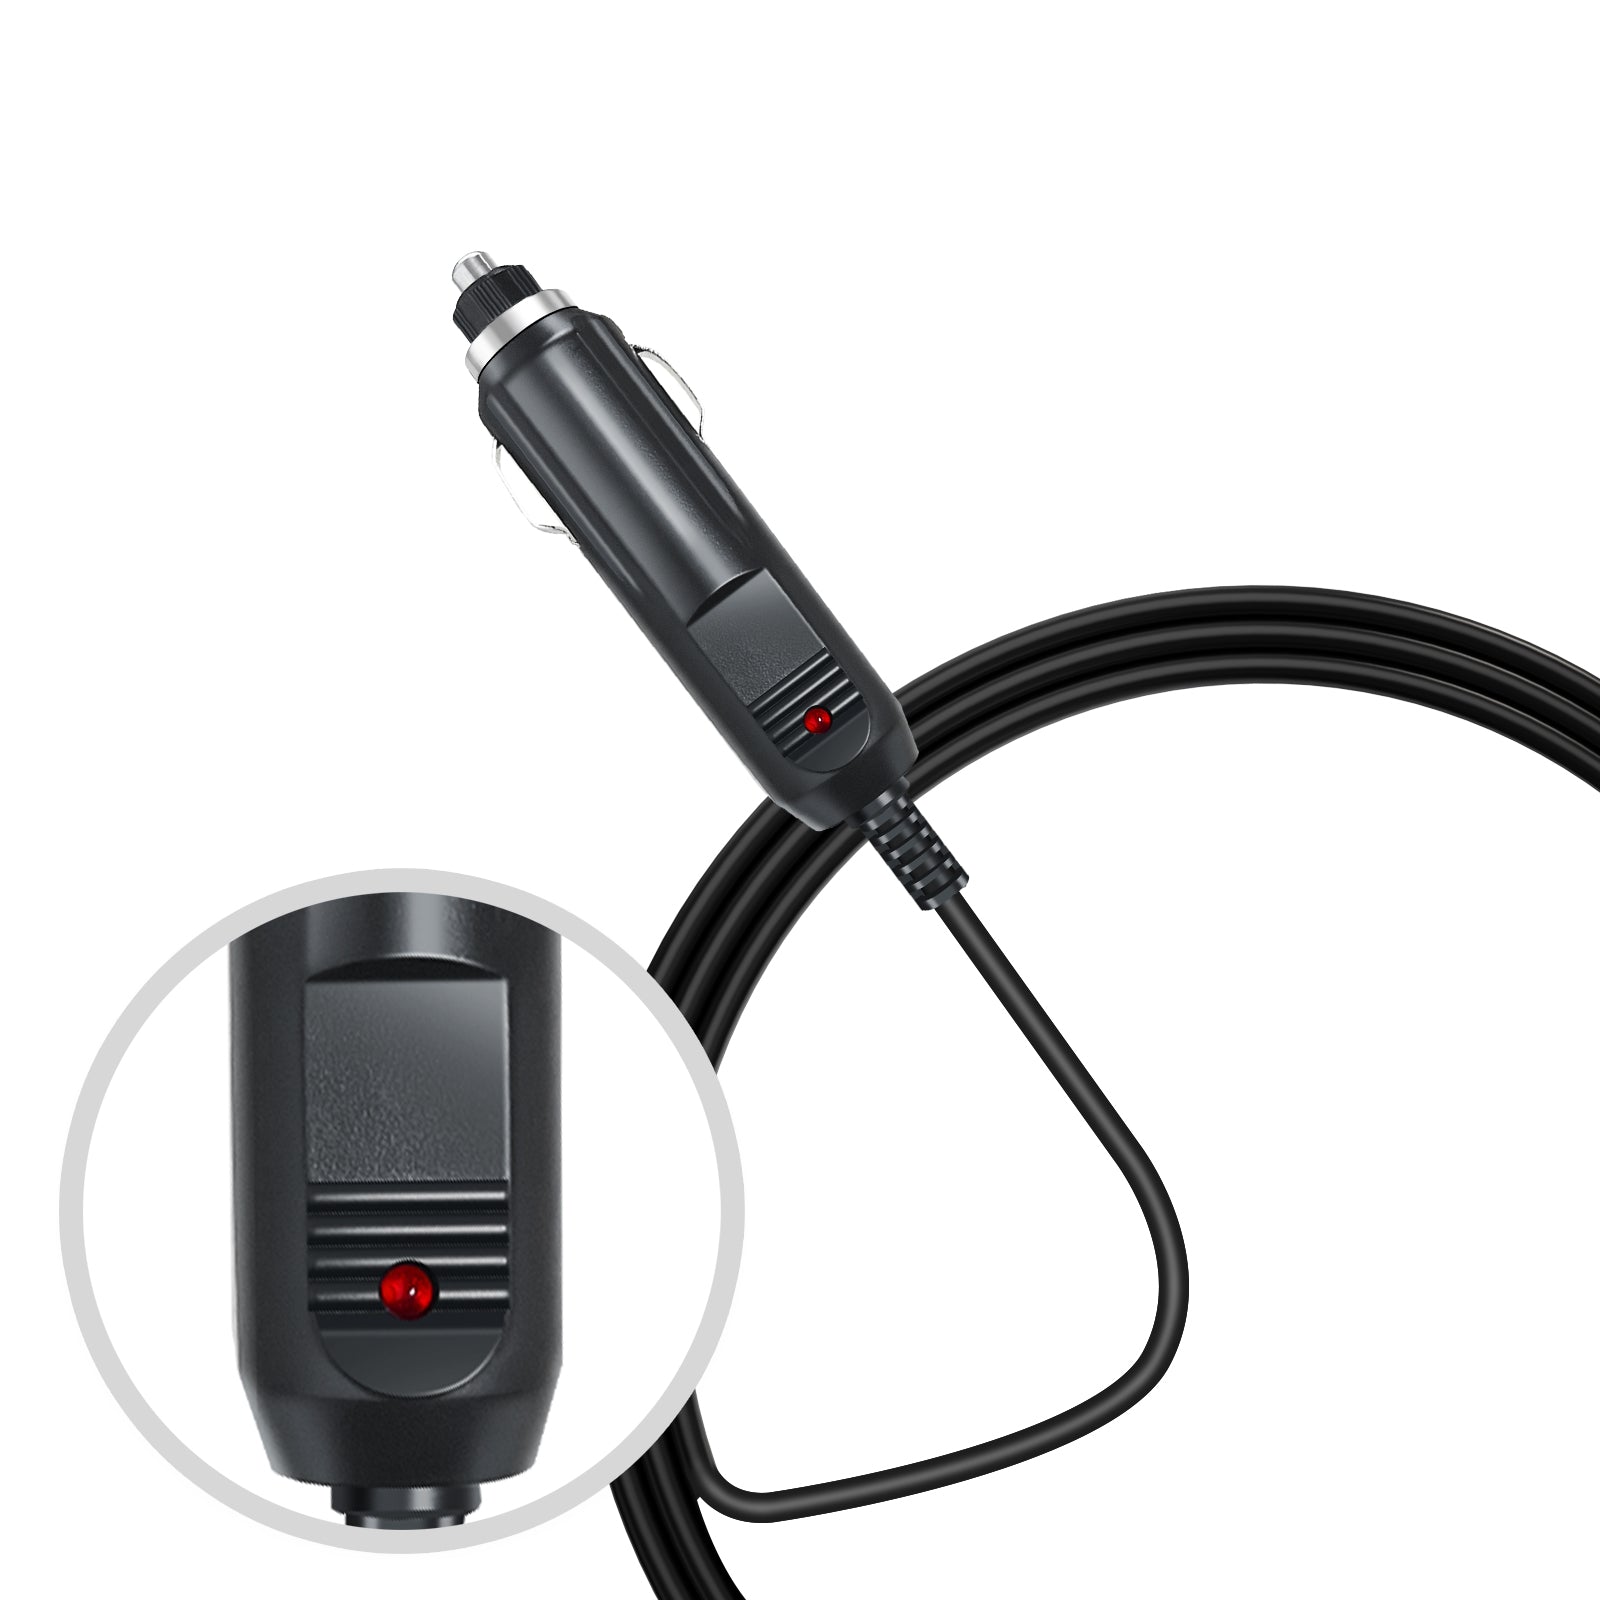 12V power car plug for Alfa R36 (cigarette lighter) connection cable